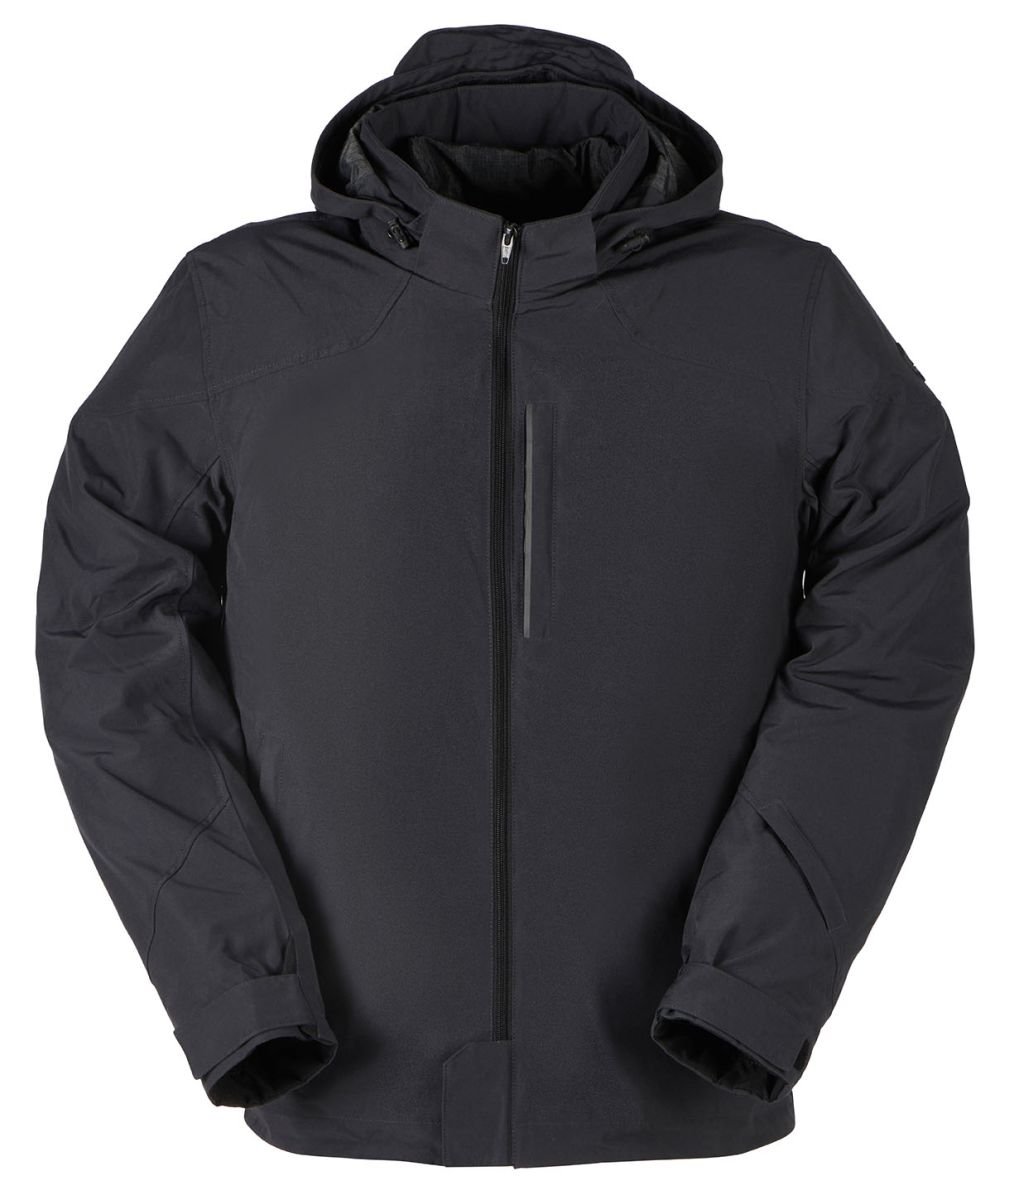 Image of Furygan London Evo 2 Jacket Gray Anthracite Size 2XL EN